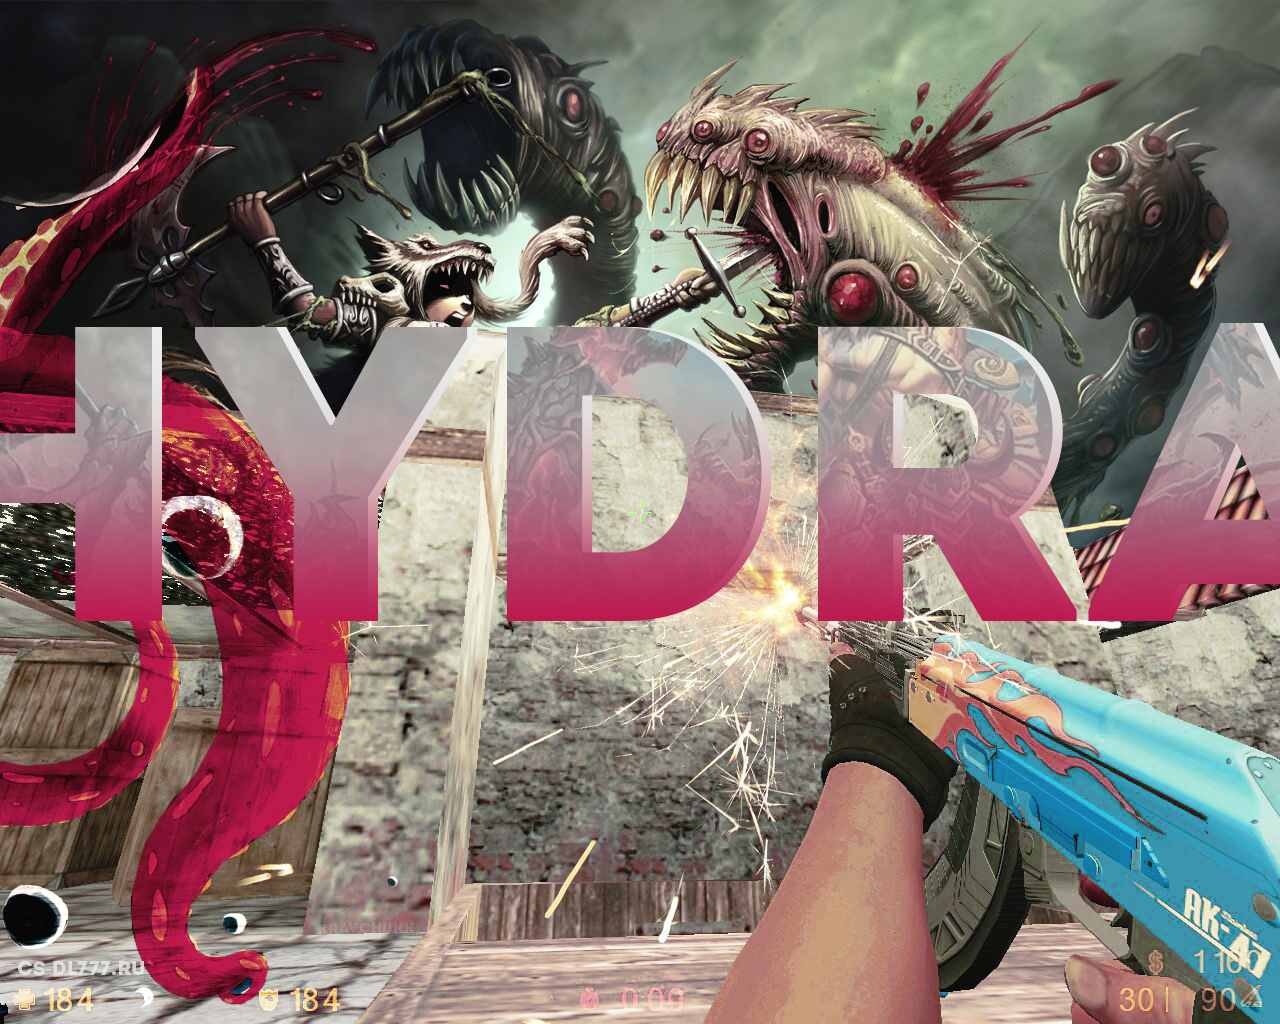 Counter-Strike 1.6 Hydra | Гидра